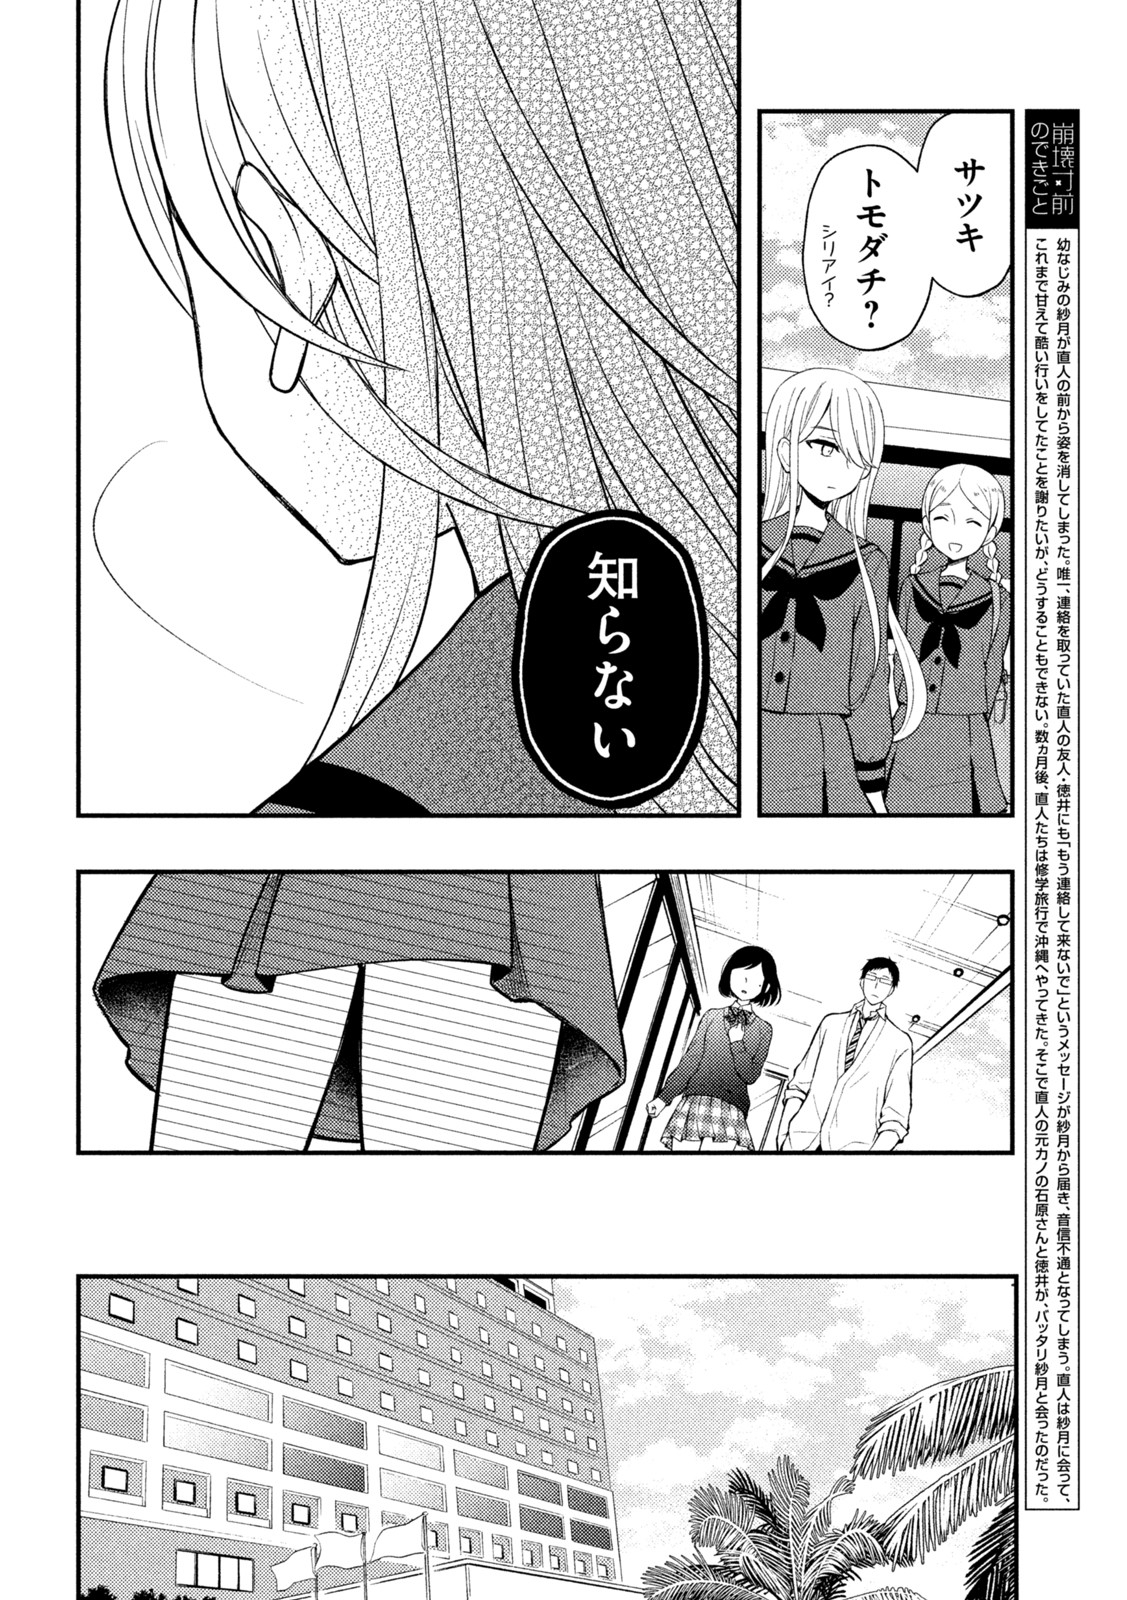 Watari-kun no xx ga Houkai Sunzen - Chapter 69 - Page 2